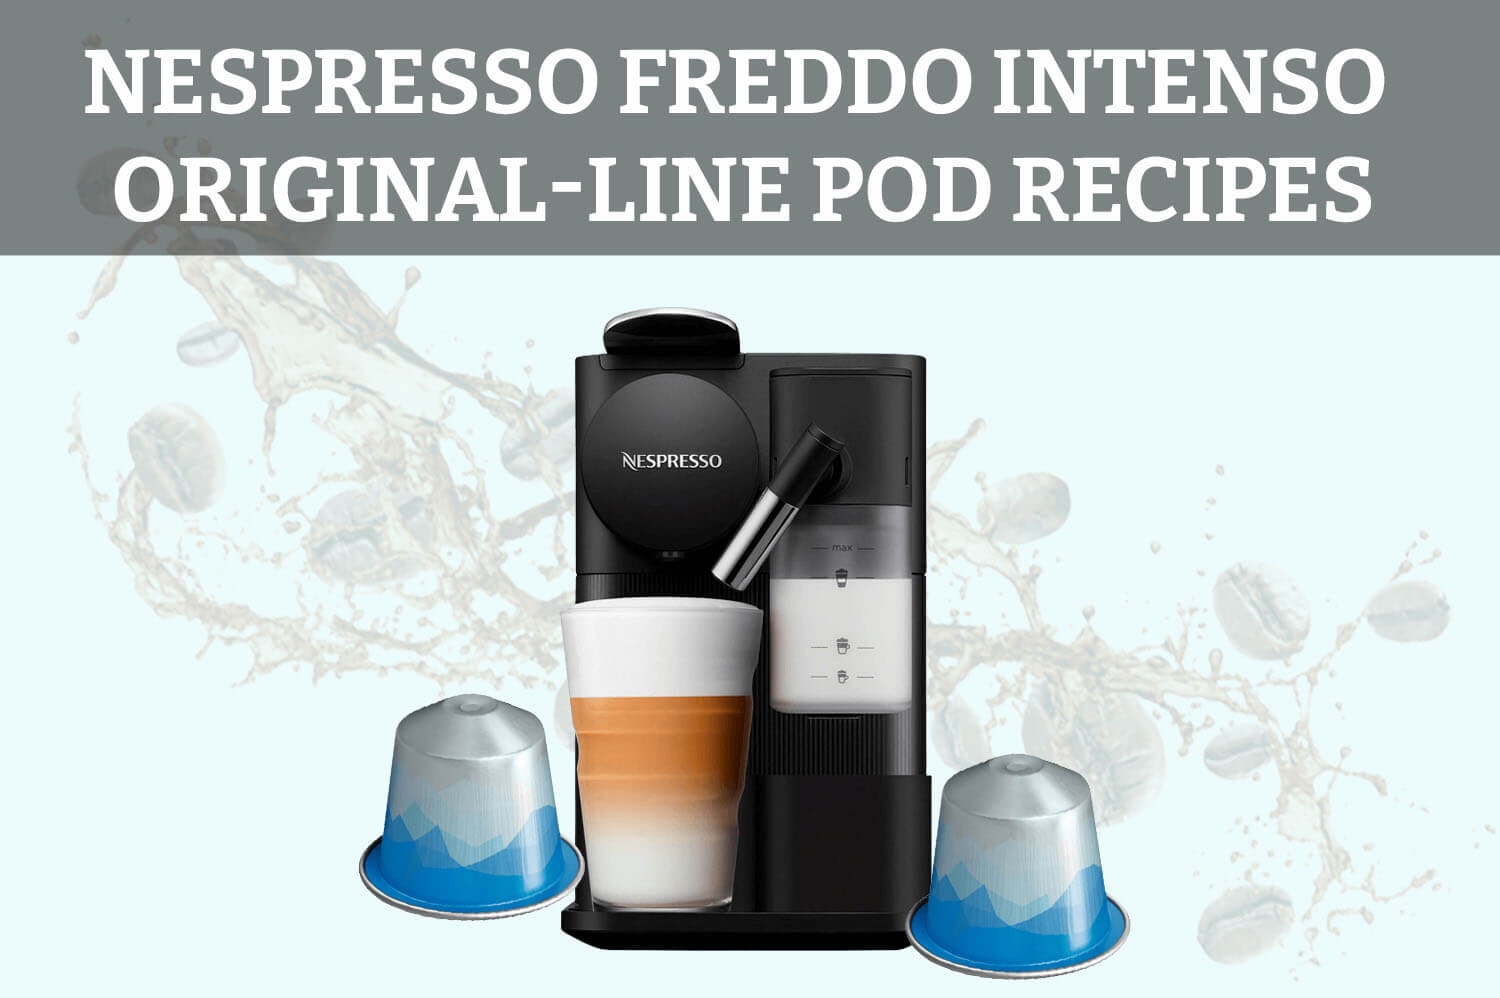 Featured image for the article "Nespresso Freddo Intenso Original-Line Pod Recipes"